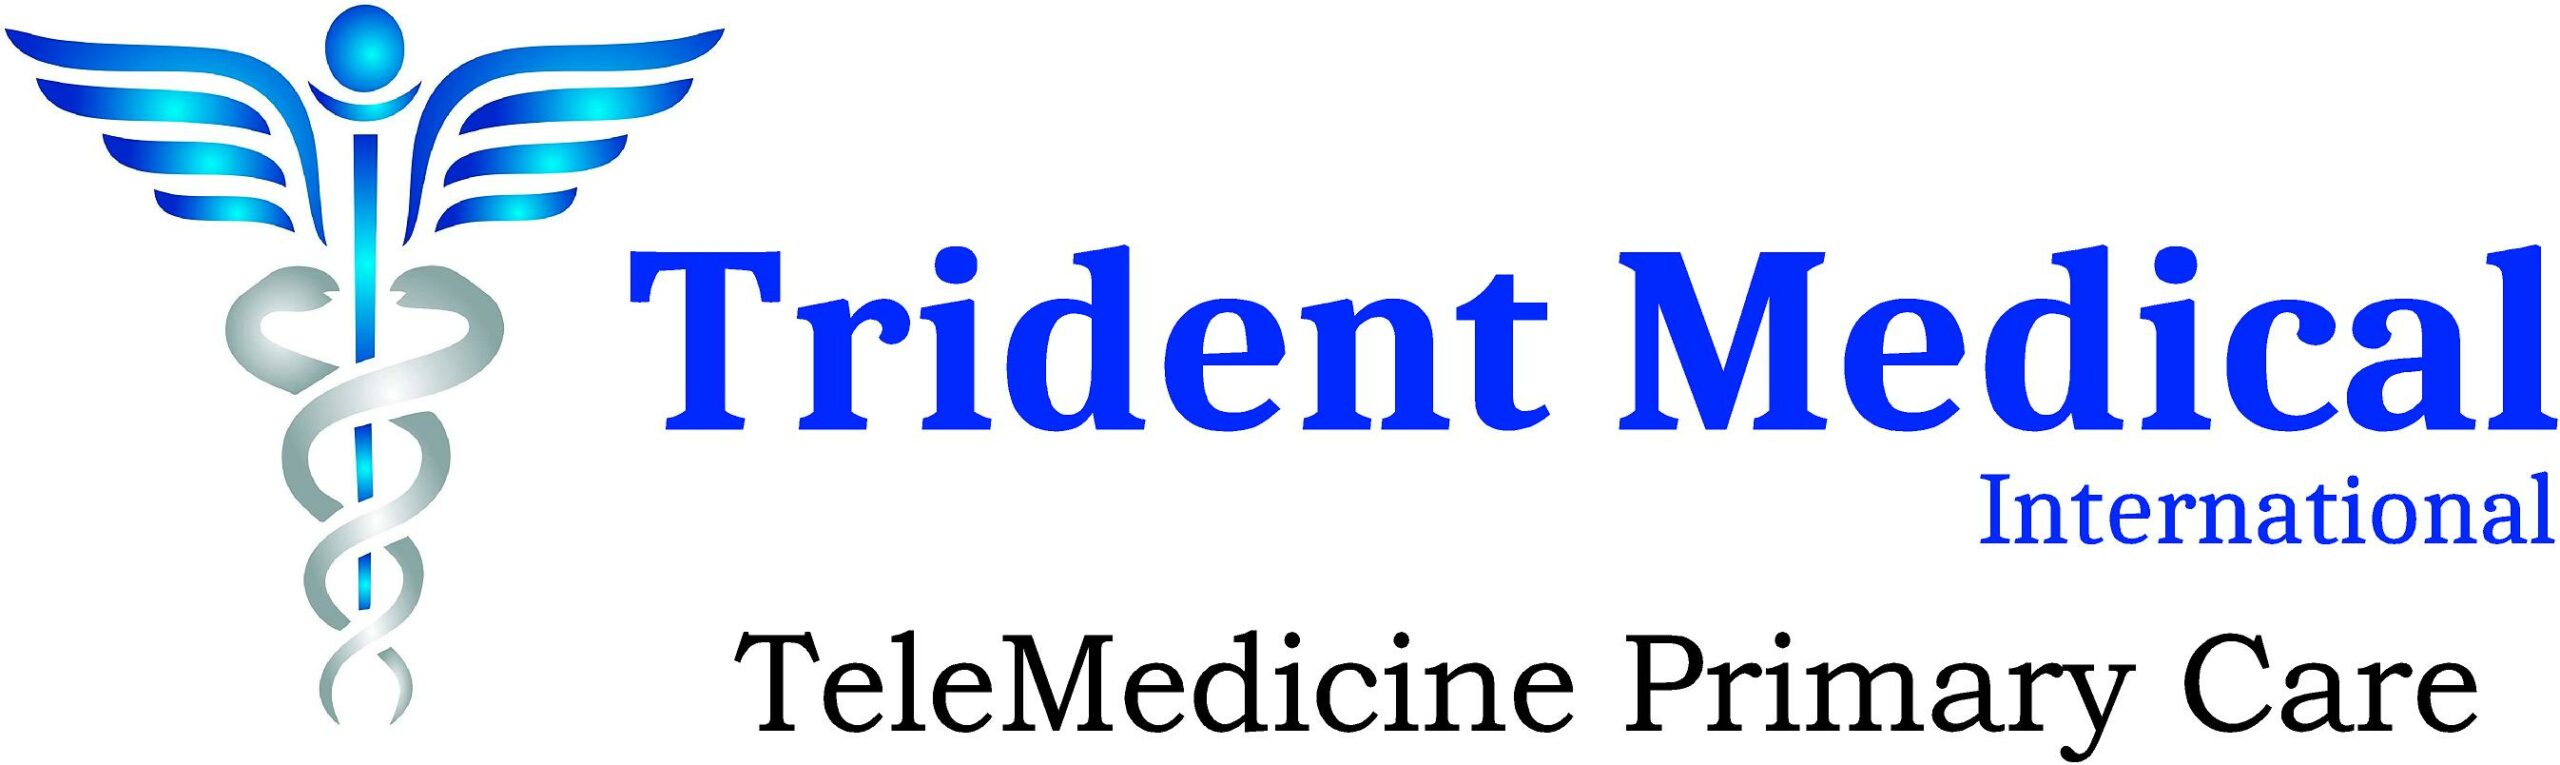 Trident Medical International